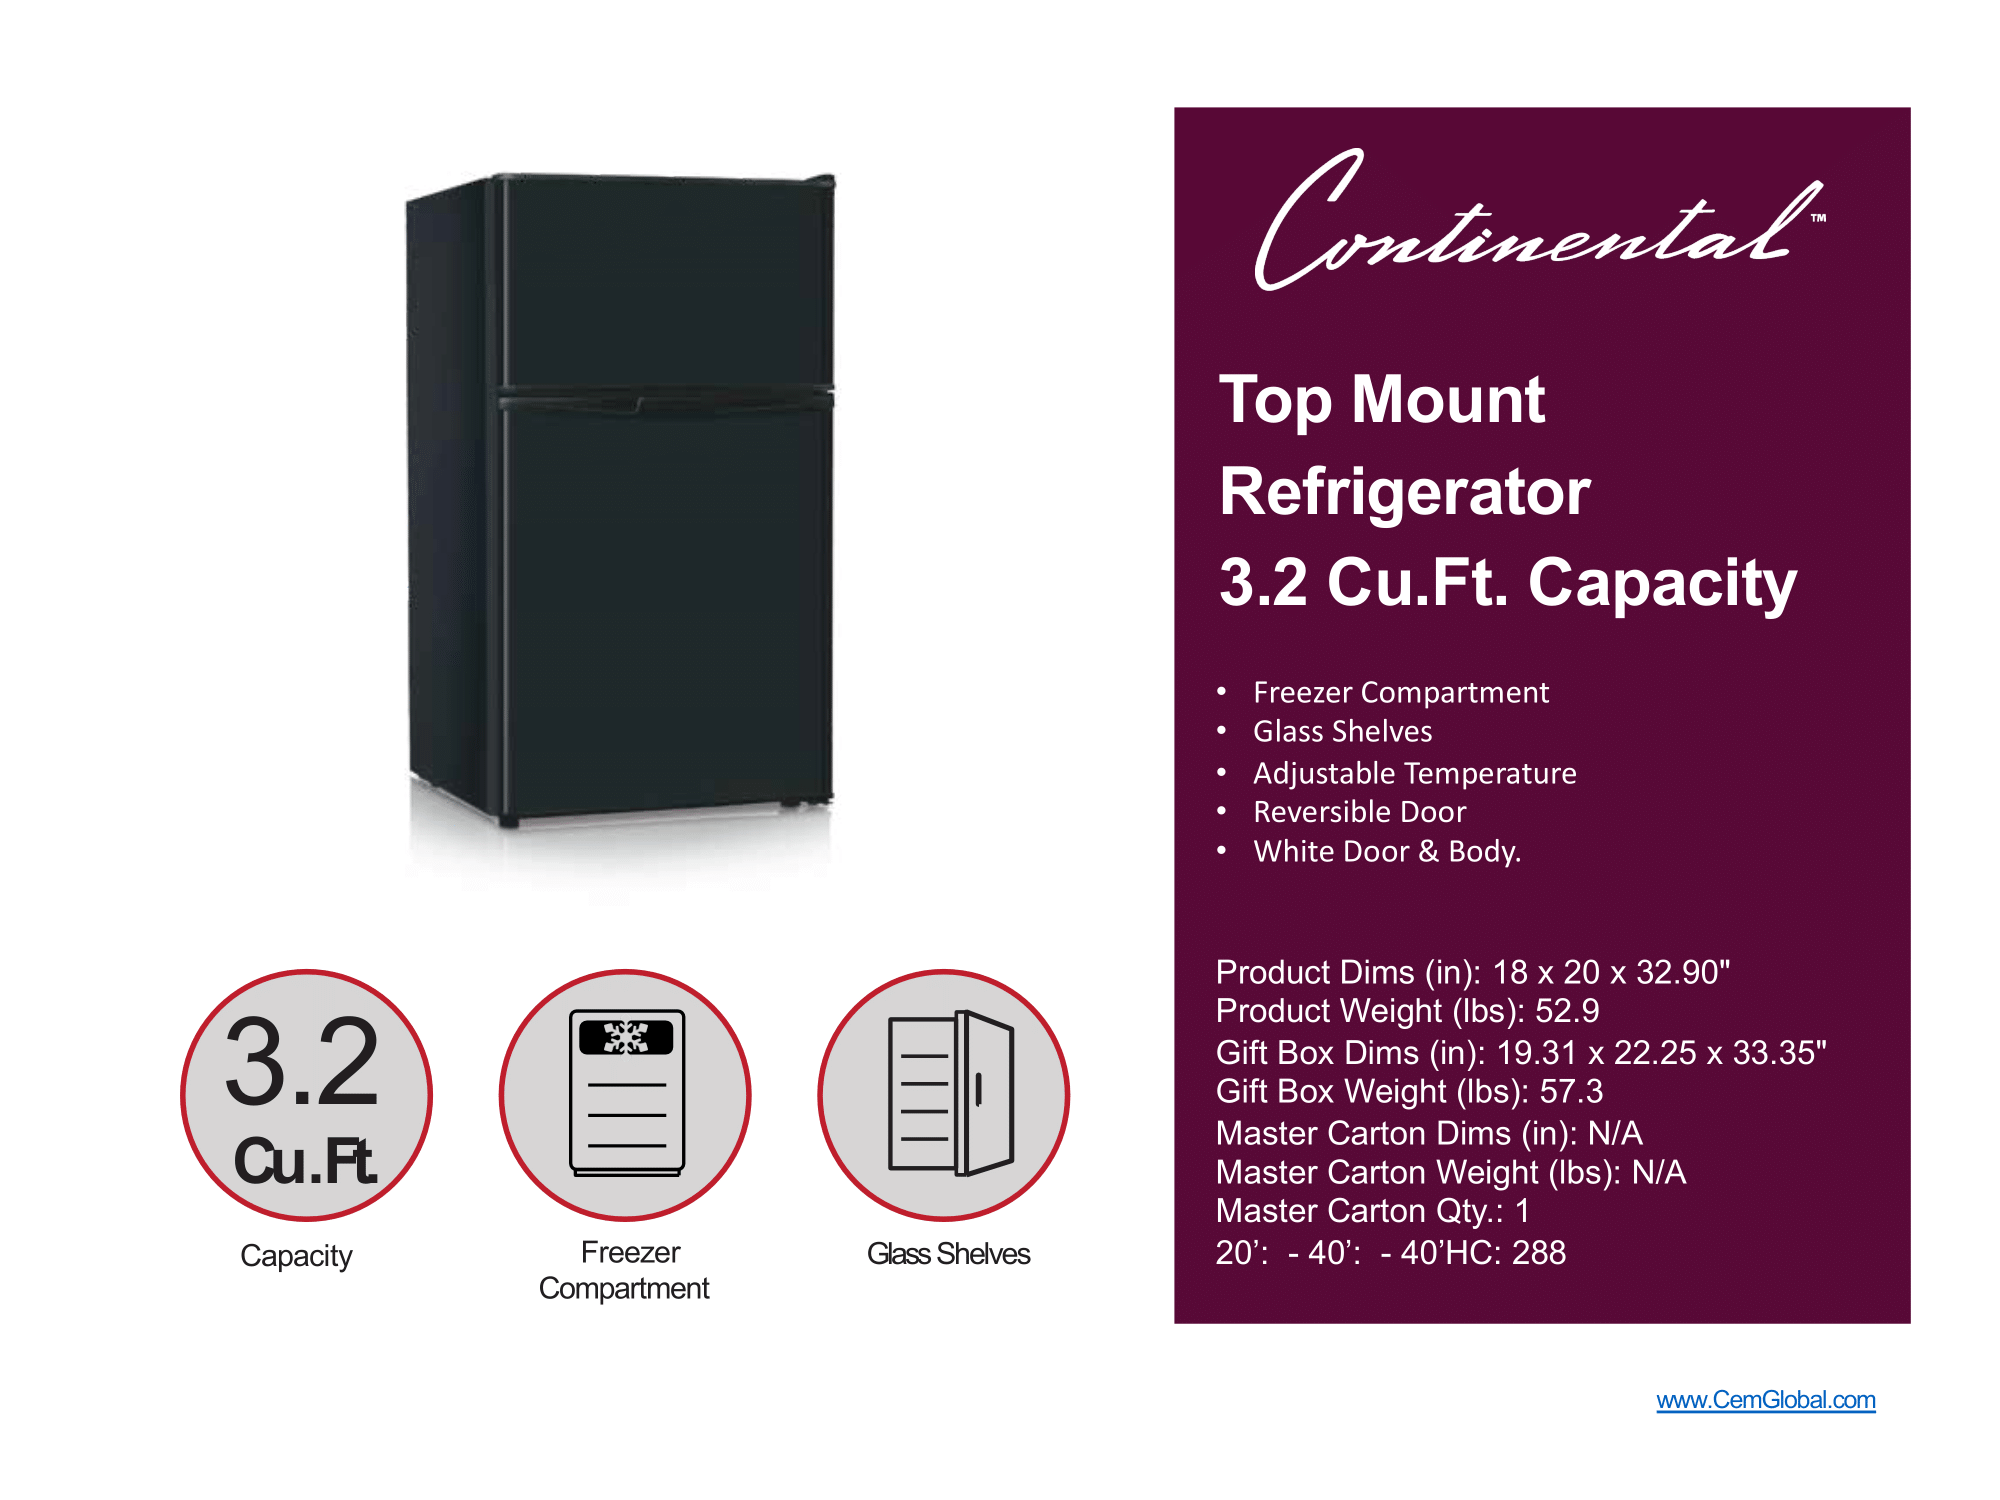 Top Mount Refrigerator 3.2. Cu.ft. capacity